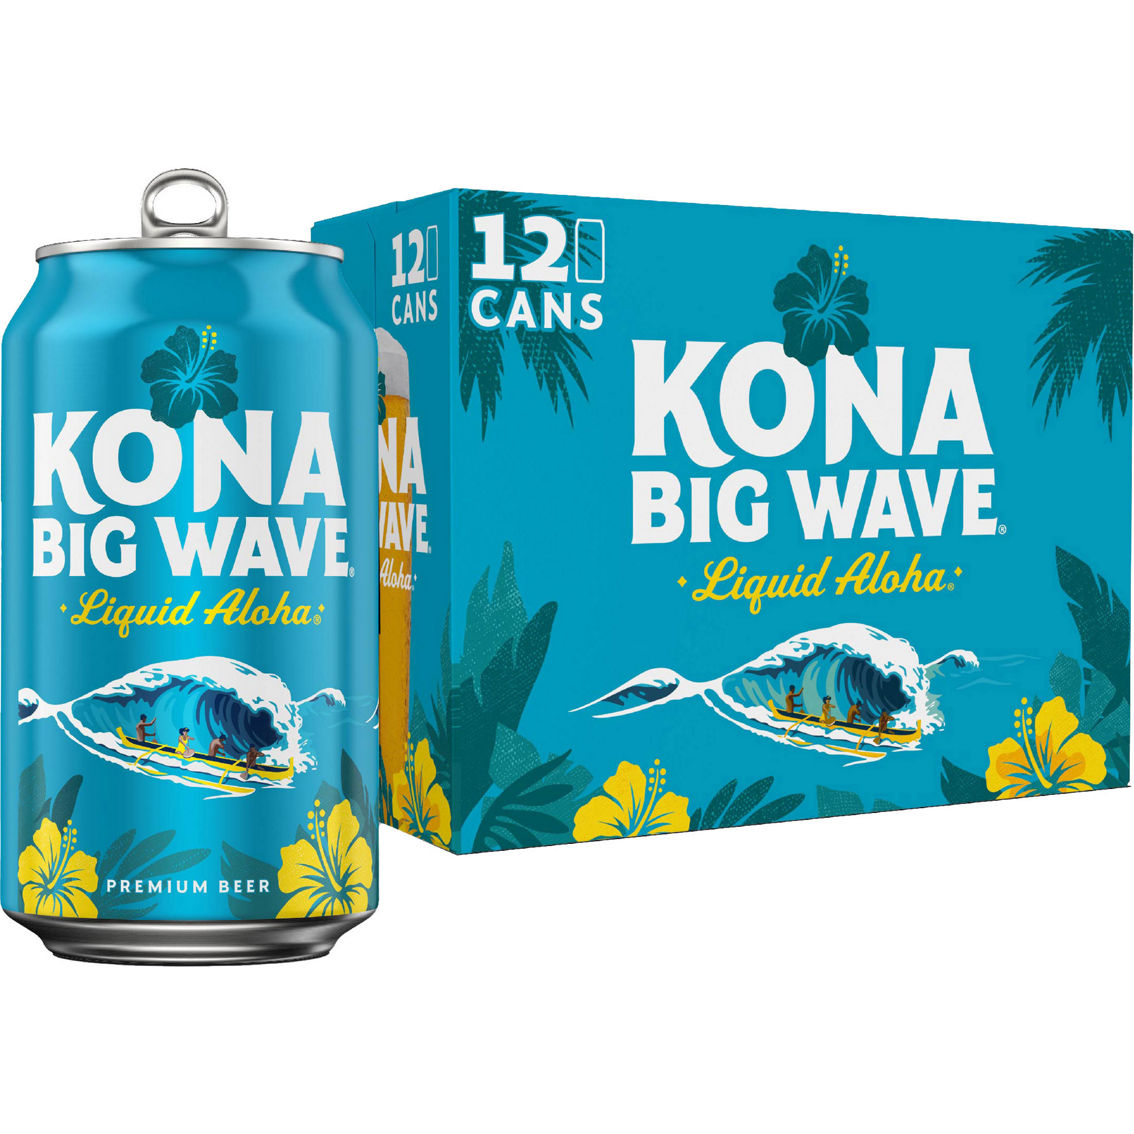 Kona Big Wave Golden Ale 12 oz. Cans 12 pk.